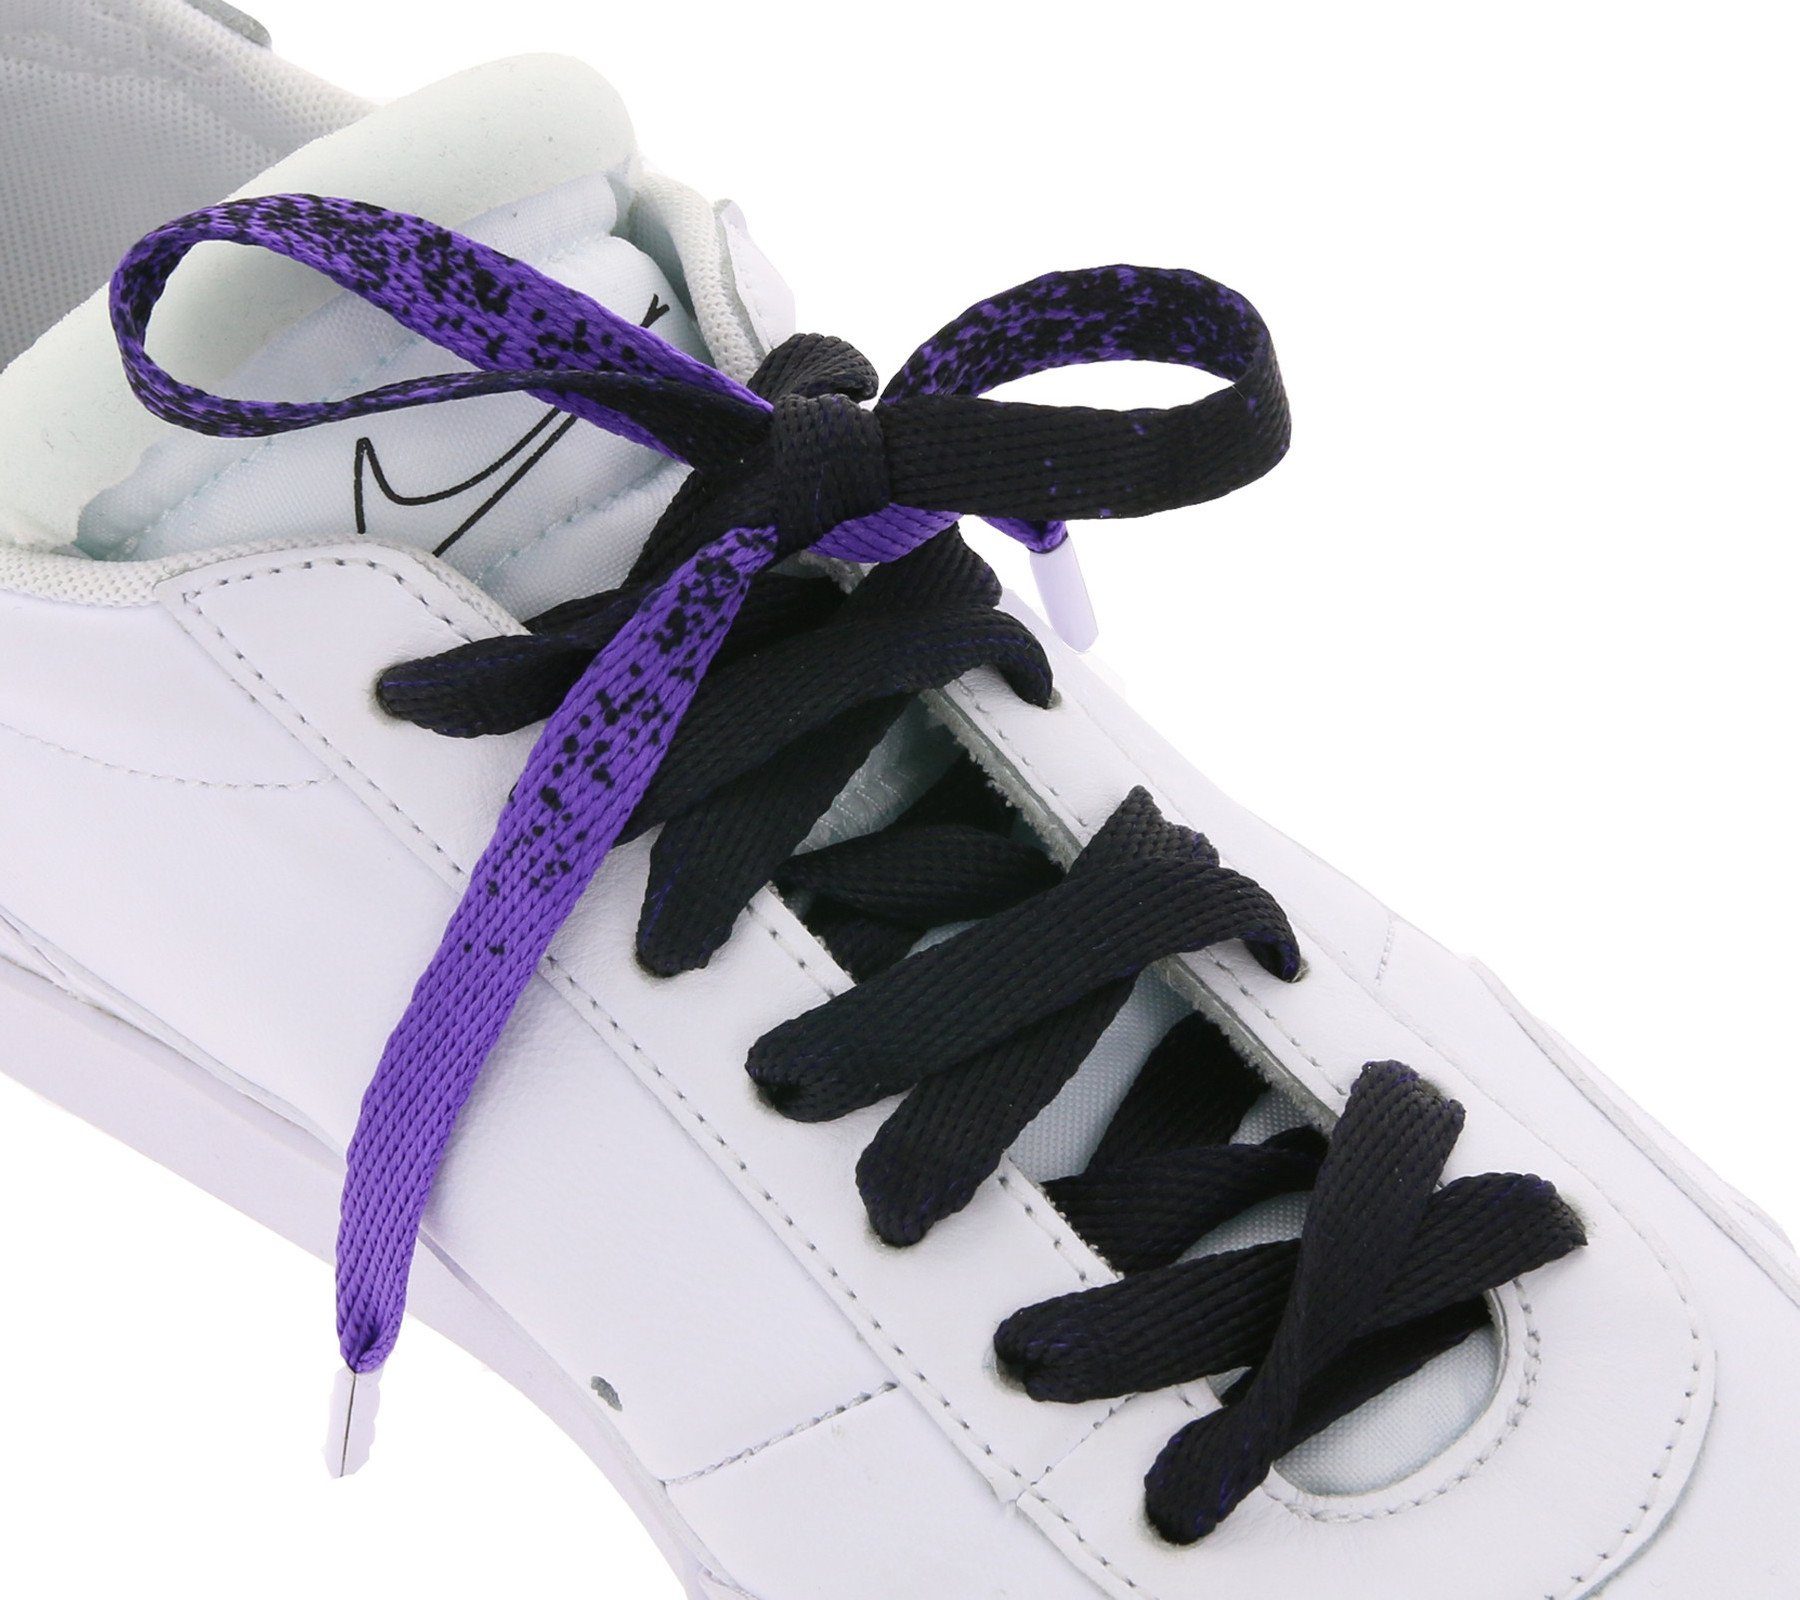 Tubelaces Schnürsenkel TubeLaces Schuhe Schnürsenkel trendige Schnürbänder Schuhbänder Violett/Schwarz | Schnürsenkel